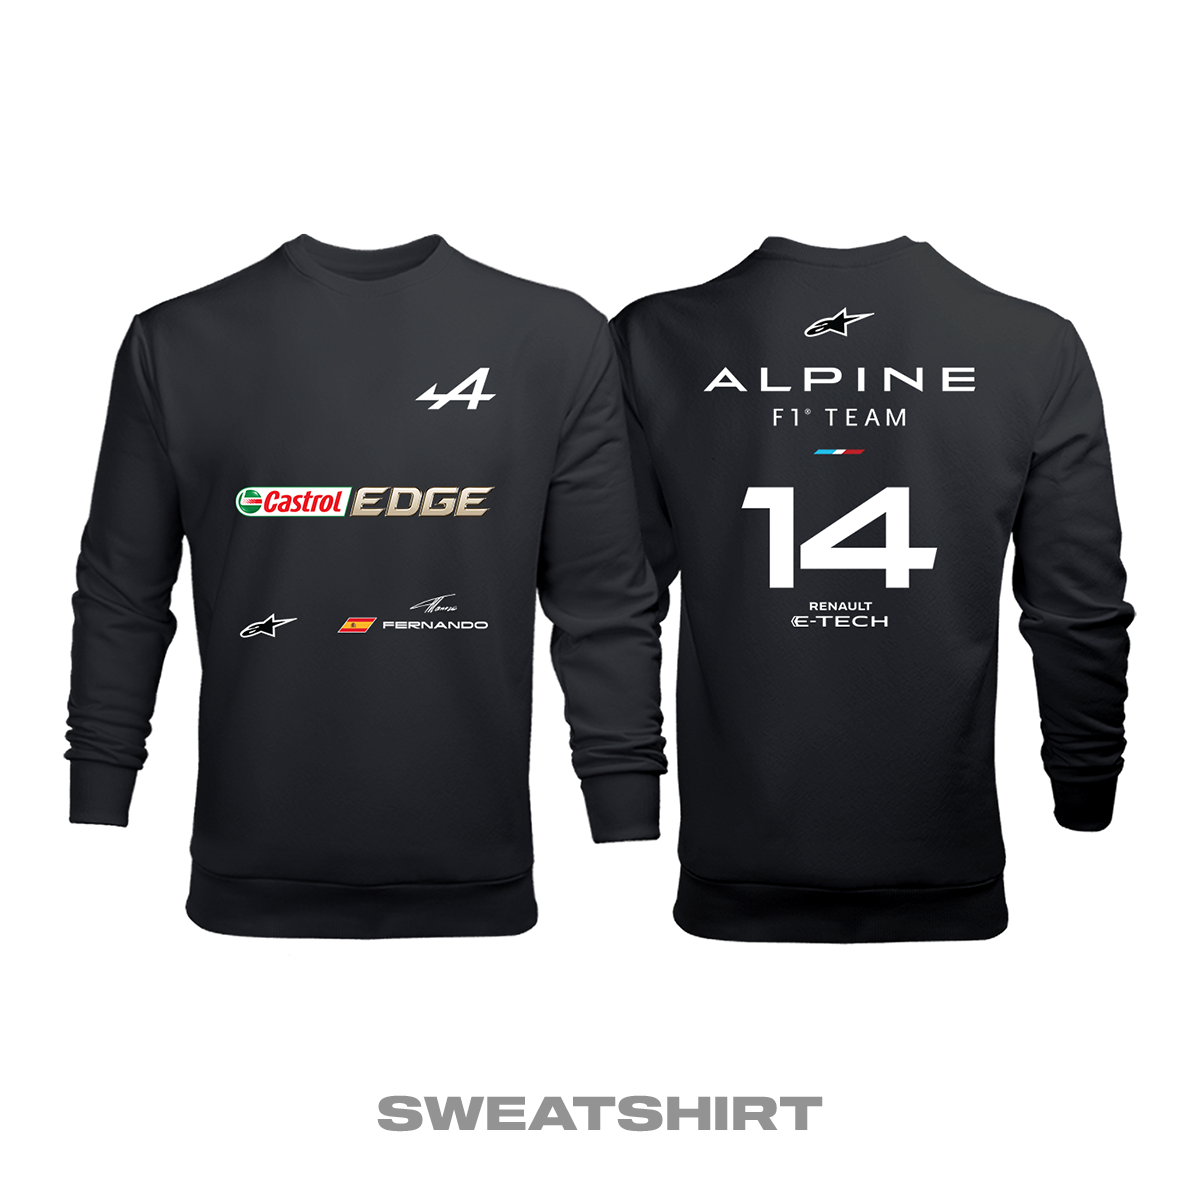 Alpine F1 Team: Black Edition 2021 Sweatshirt